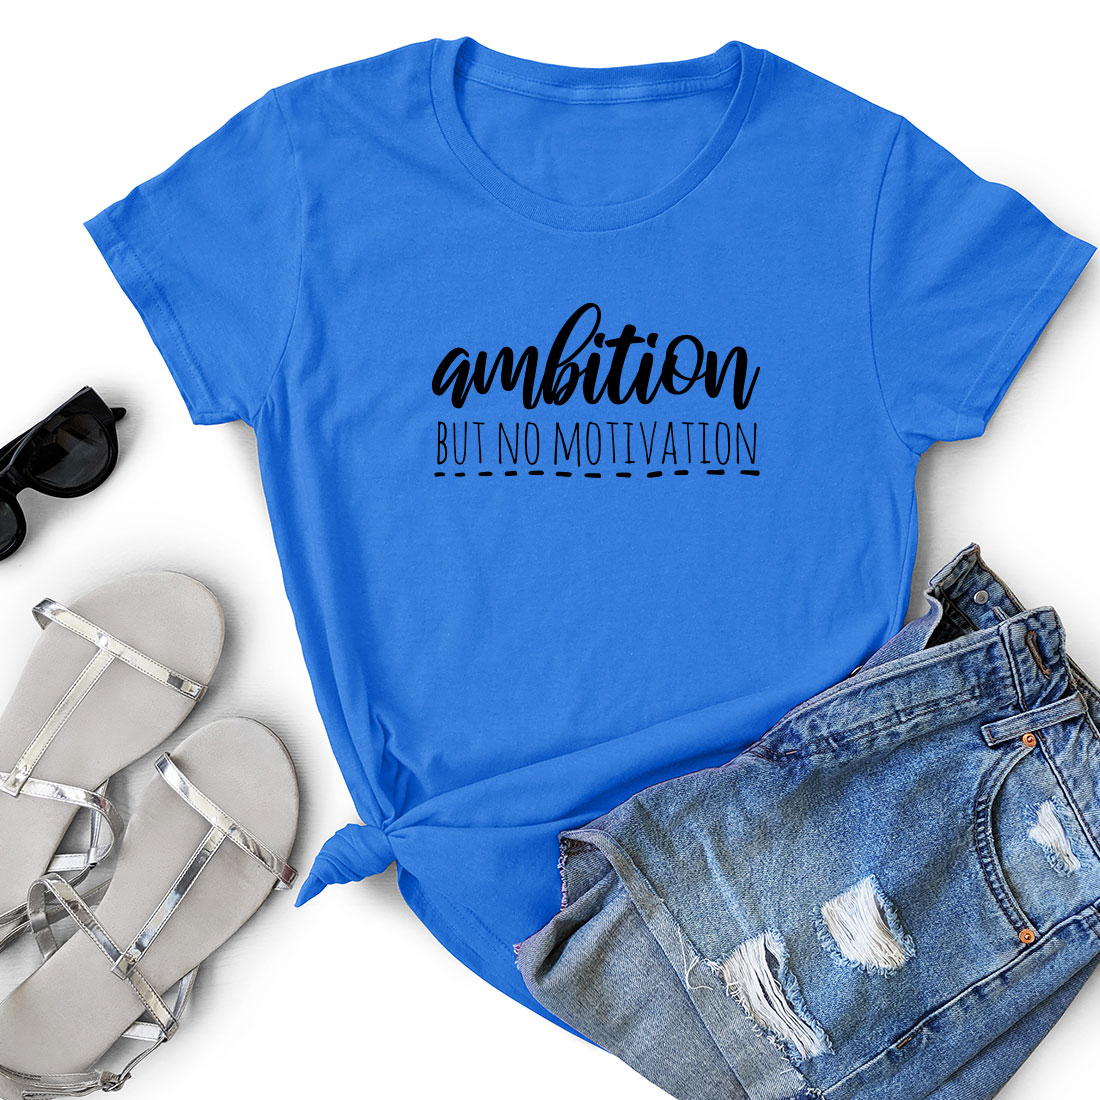 T - shirt that says ambition but no motivation.